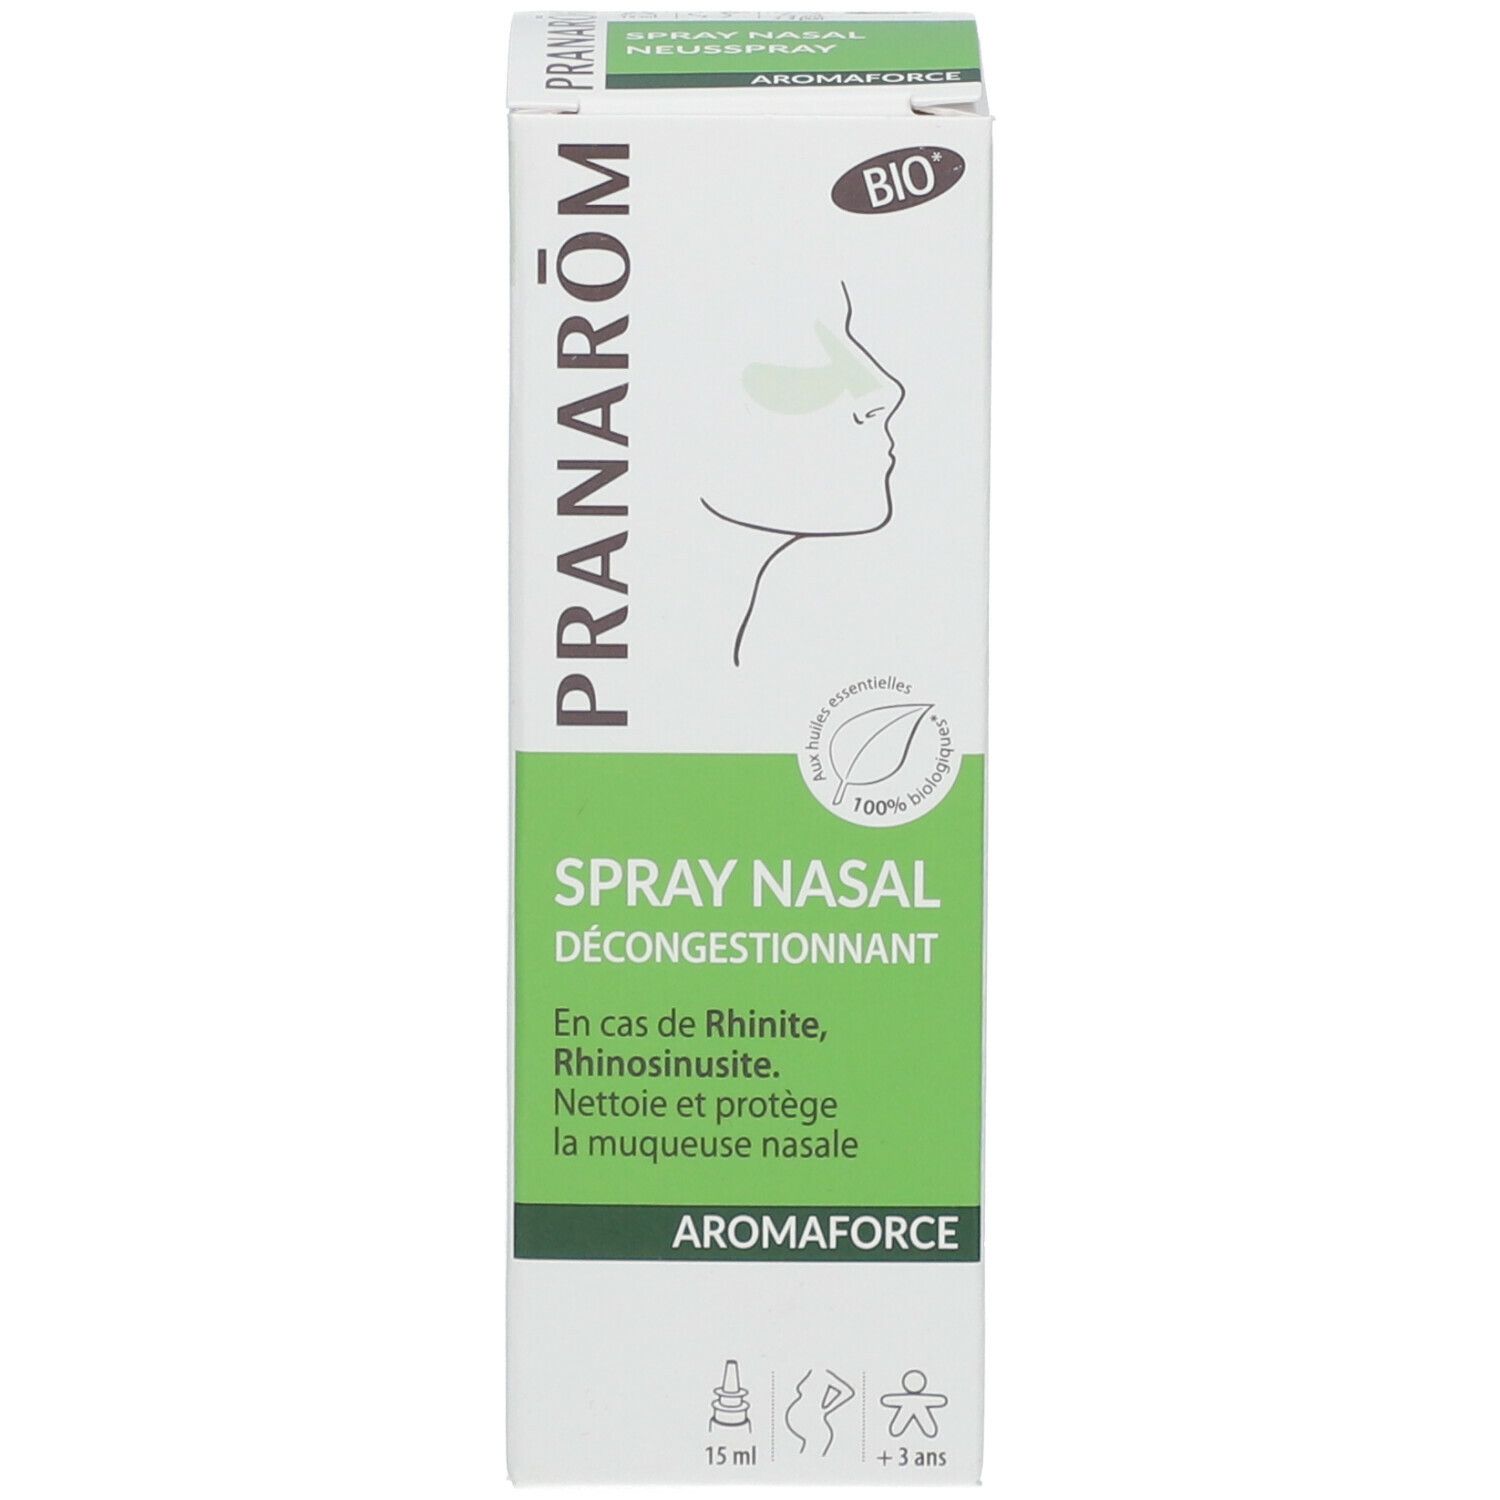 Pranarom Aromaforce spray nasal bio